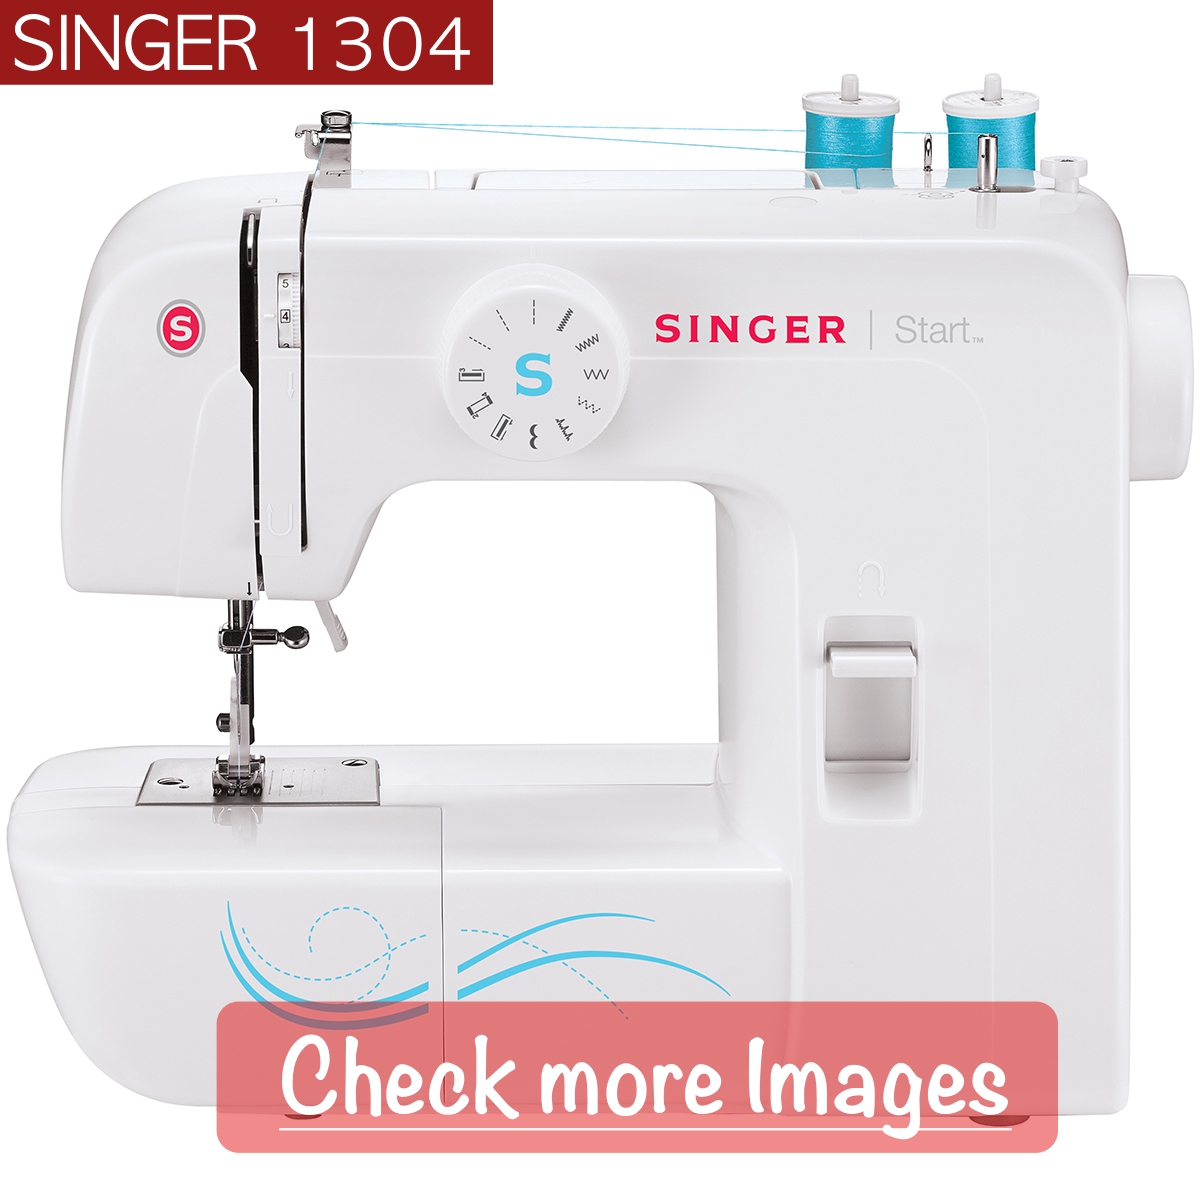 Singer Start 1304 Sewing Machine Review